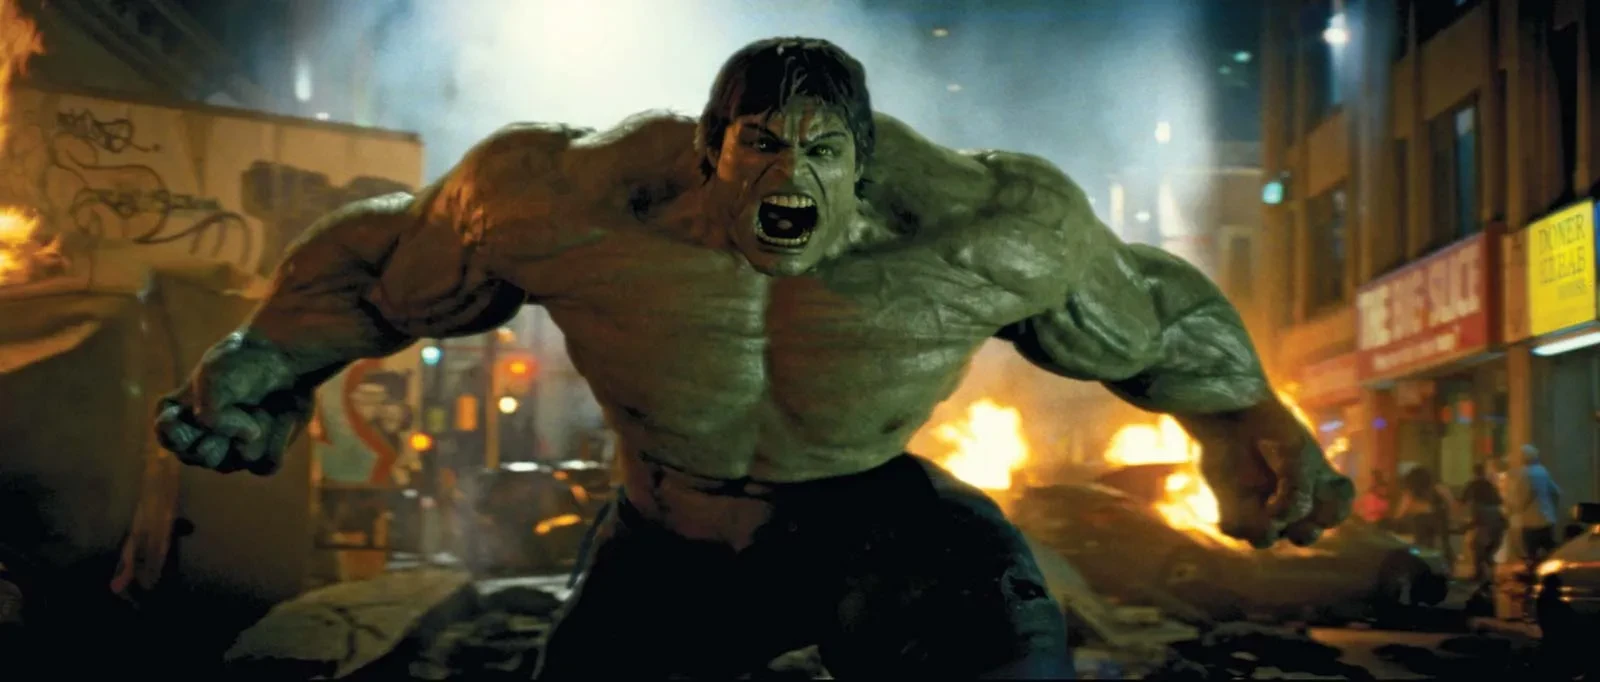 The Incredible Hulk (2008) Edward Norton 